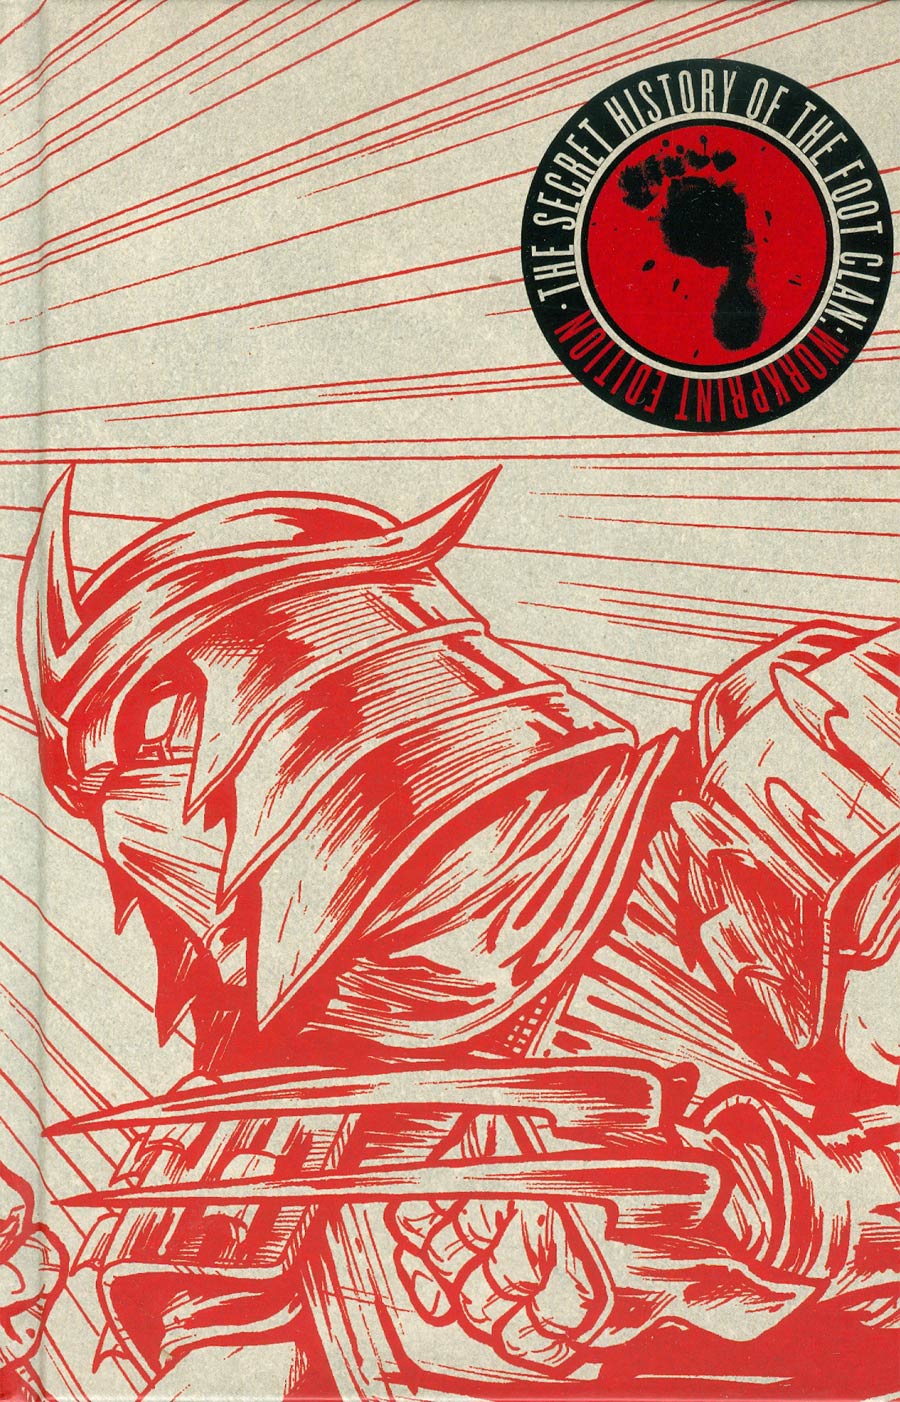 Teenage Mutant Ninja Turtles Secret History Of The Foot Clan Workprint Edition HC